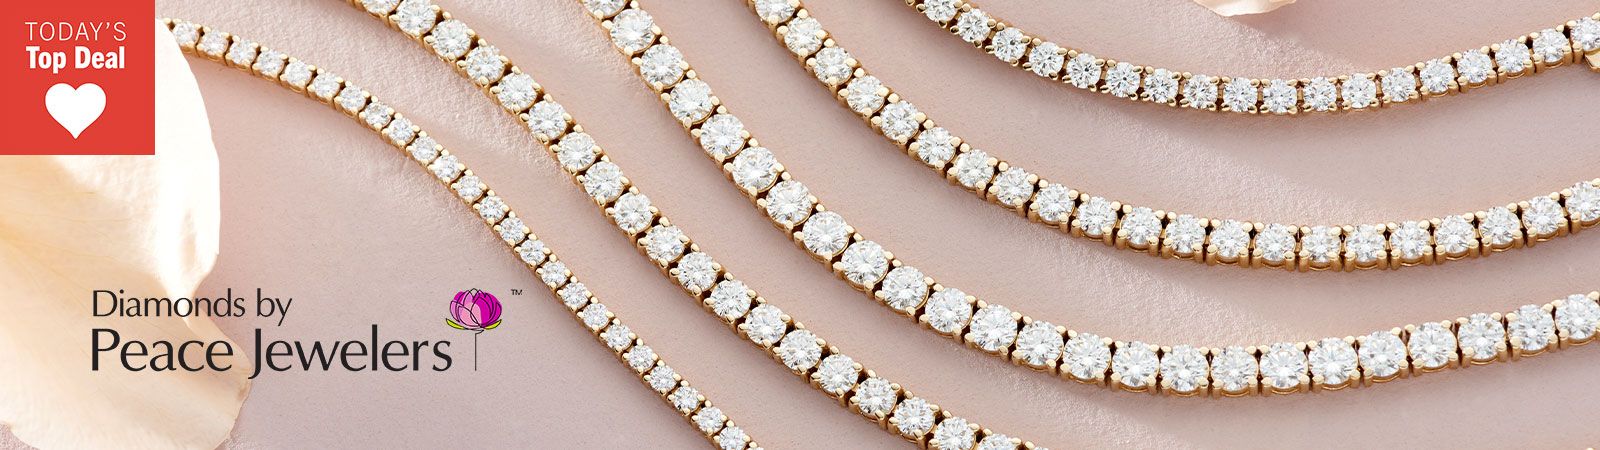 210-216 Peace Jewelers 14K Gold Choice of Carat Weight Cultured Diamond Tennis Bracelet